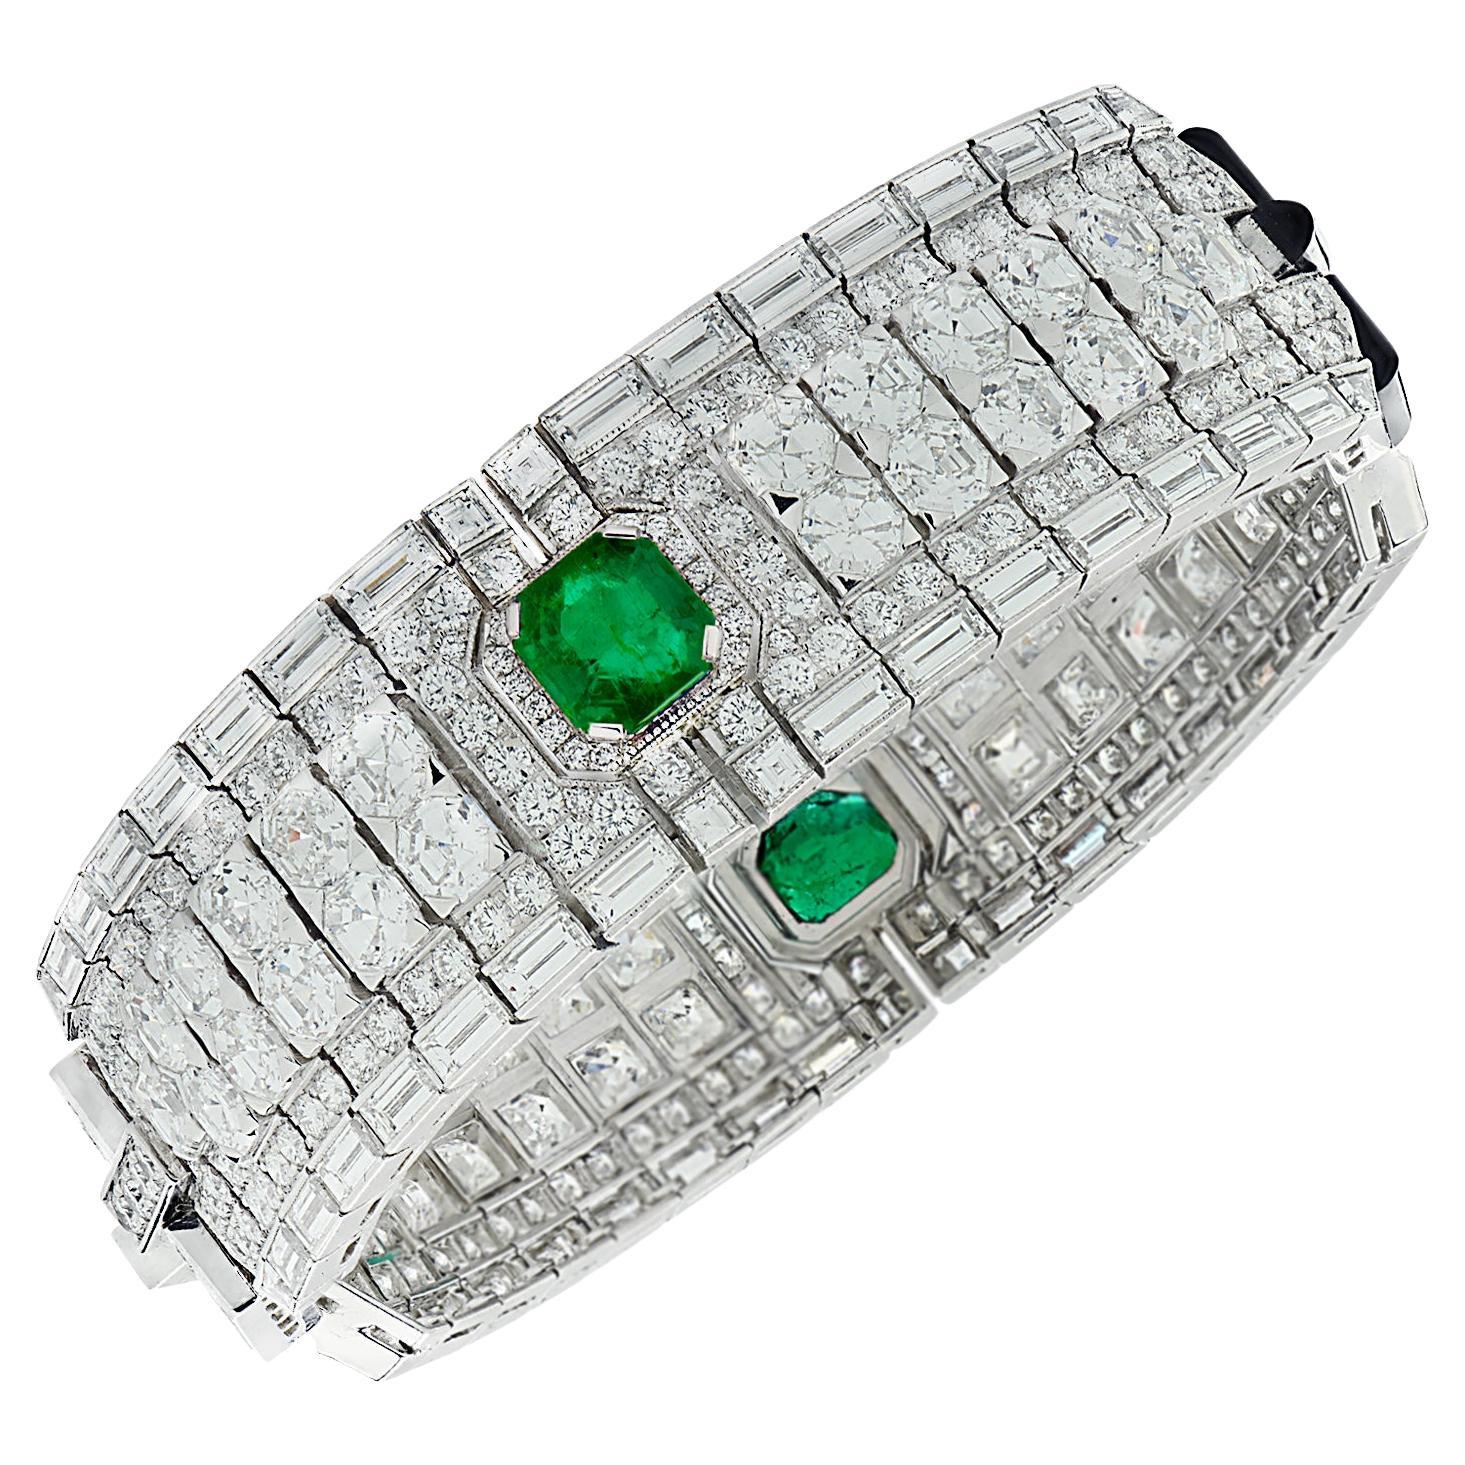 25.12 Carat Ascher Cut Diamond & Emerald Bracelet